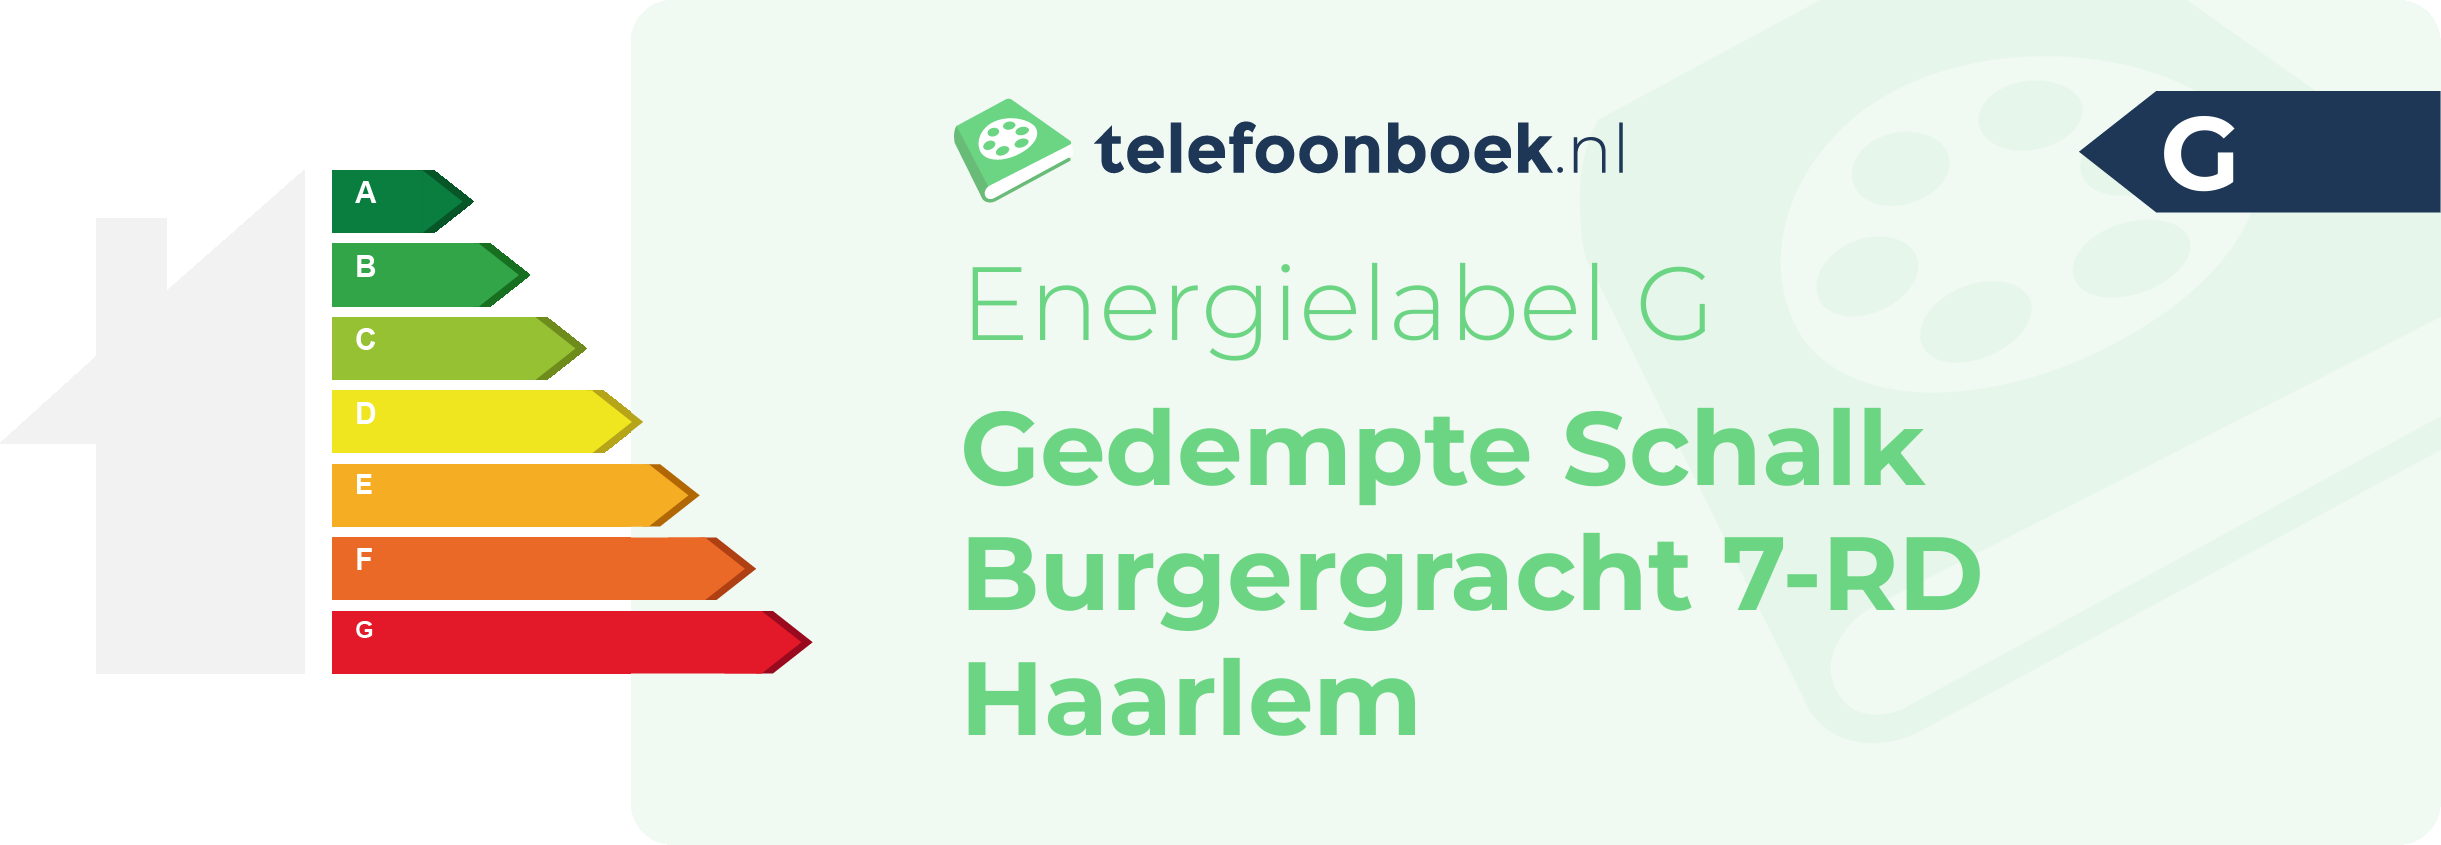 Energielabel Gedempte Schalk Burgergracht 7-RD Haarlem